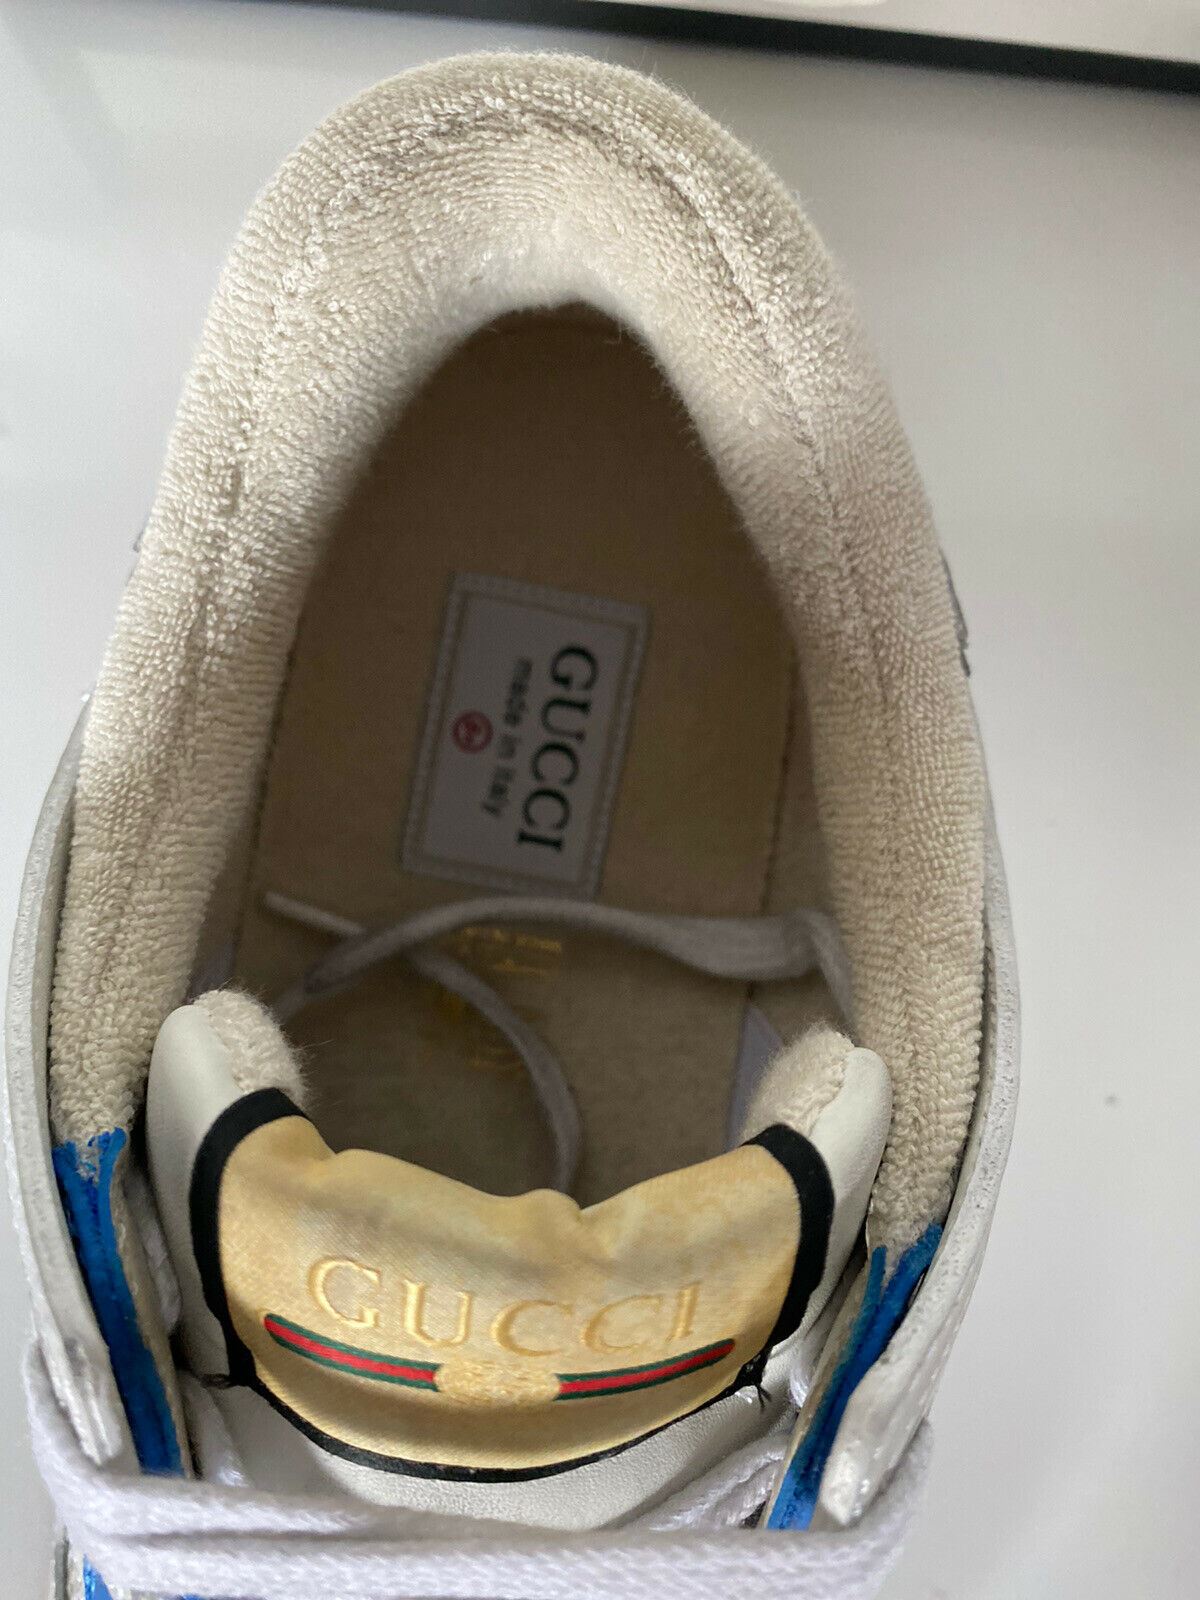 NIB Gucci Men’s Miro Soft Leather White Sneakers Shoes 9 US (Gucci 8.5) IT 92345